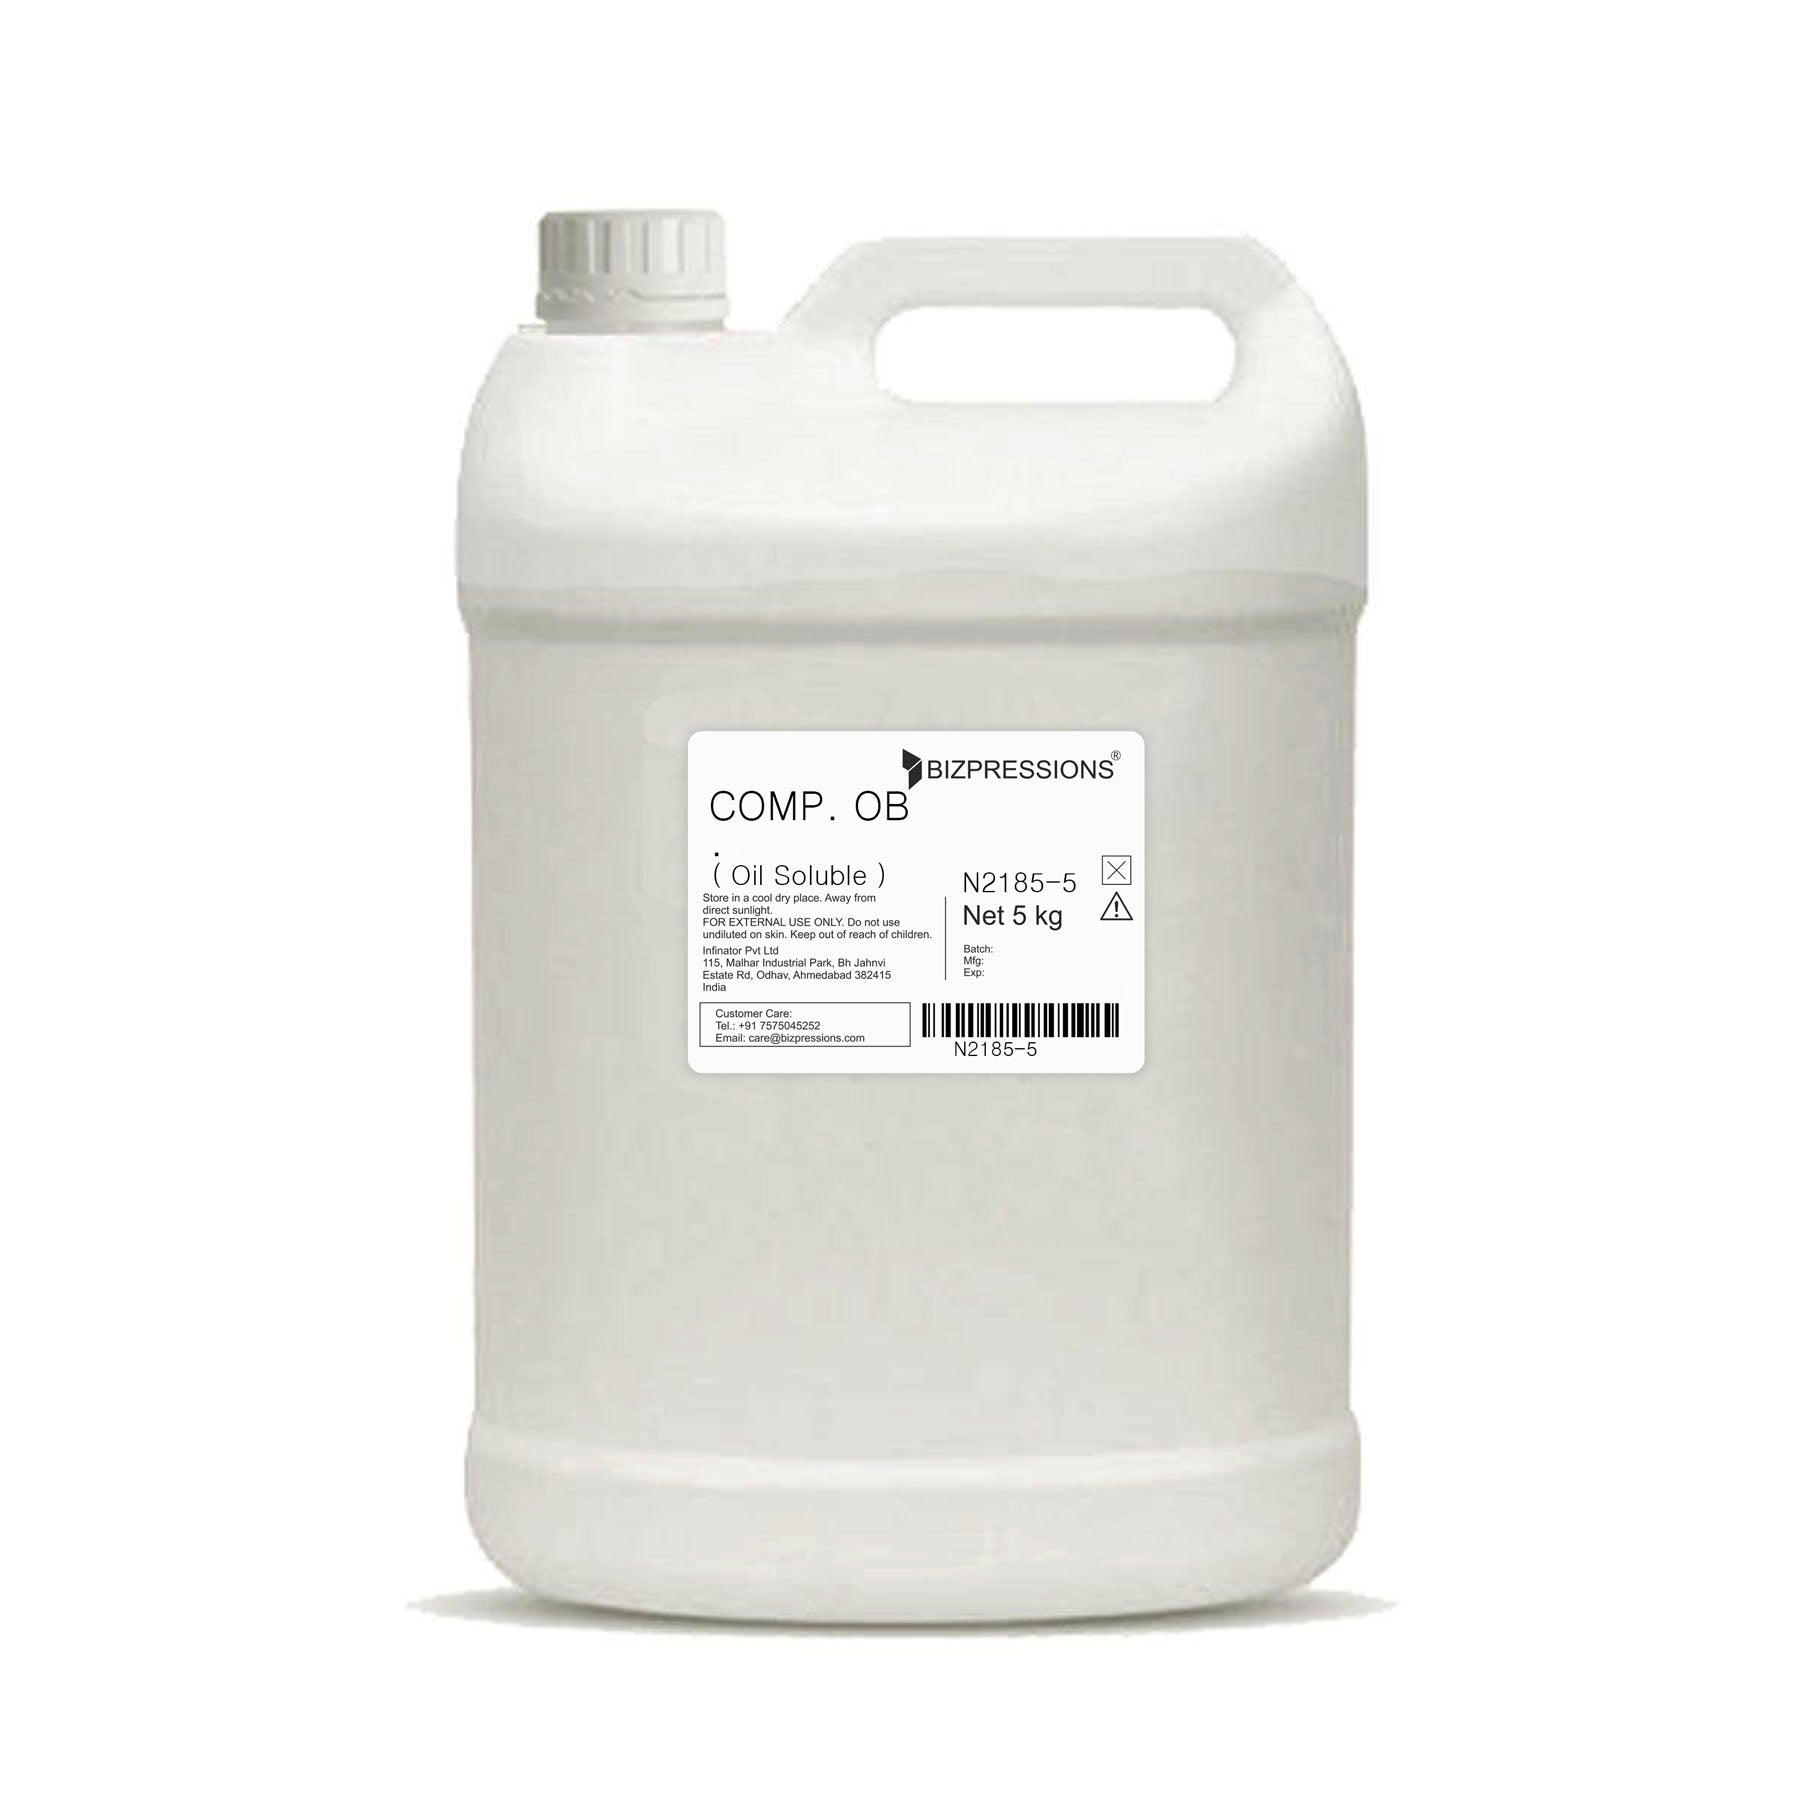 COMP. OB - Fragrance ( Oil Soluble ) - 5 kg